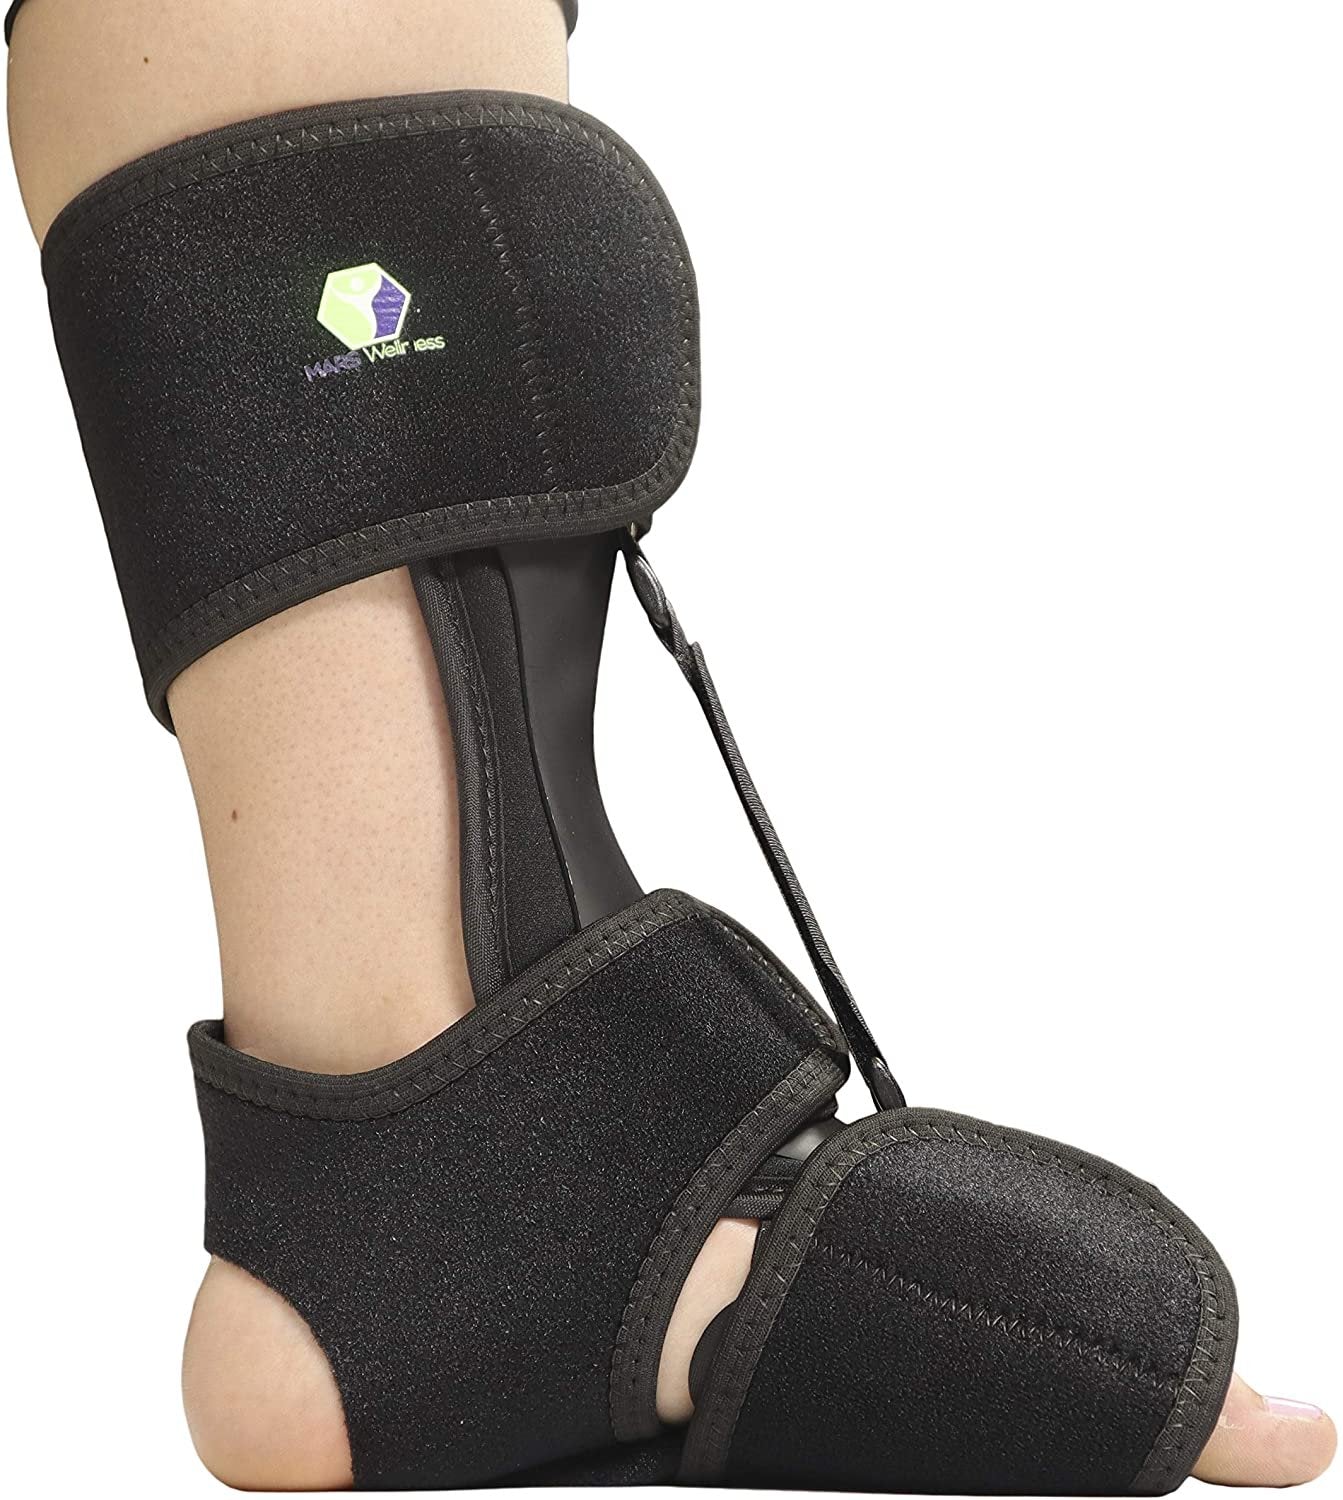 Plantar Fasciitis Night Splint Drop Foot Brace, Ankle Support with